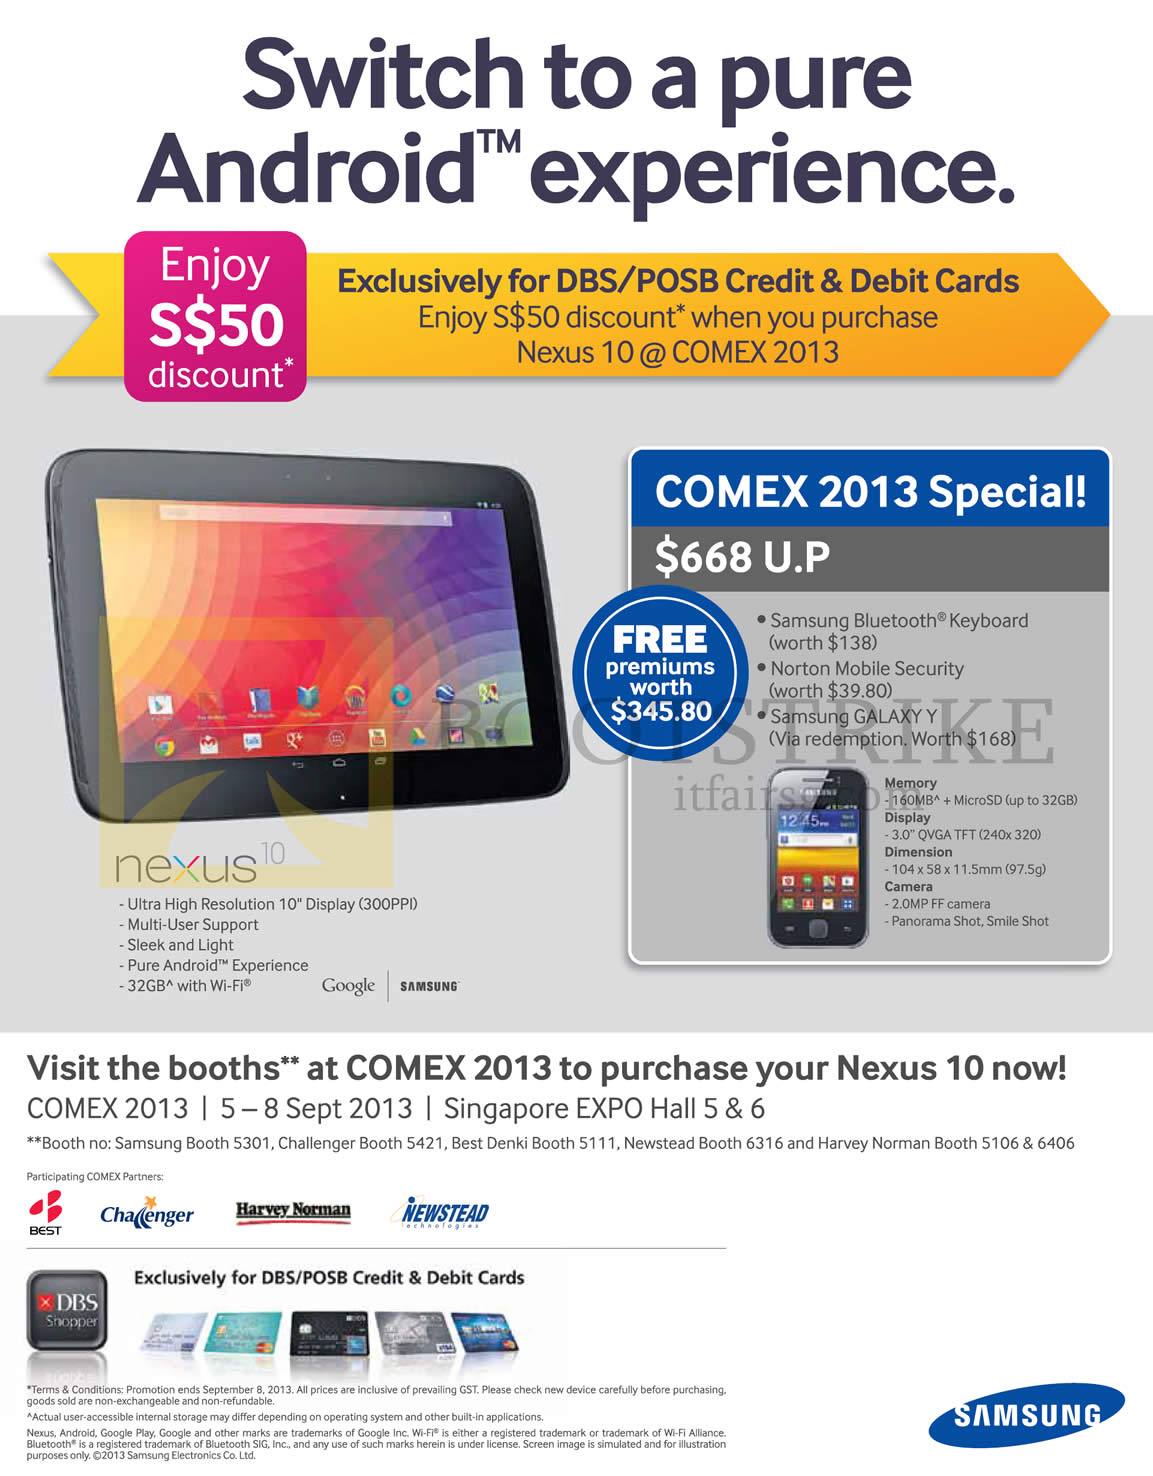 COMEX 2013 price list image brochure of Samsung Tablets Nexus 10, DBS, POSB